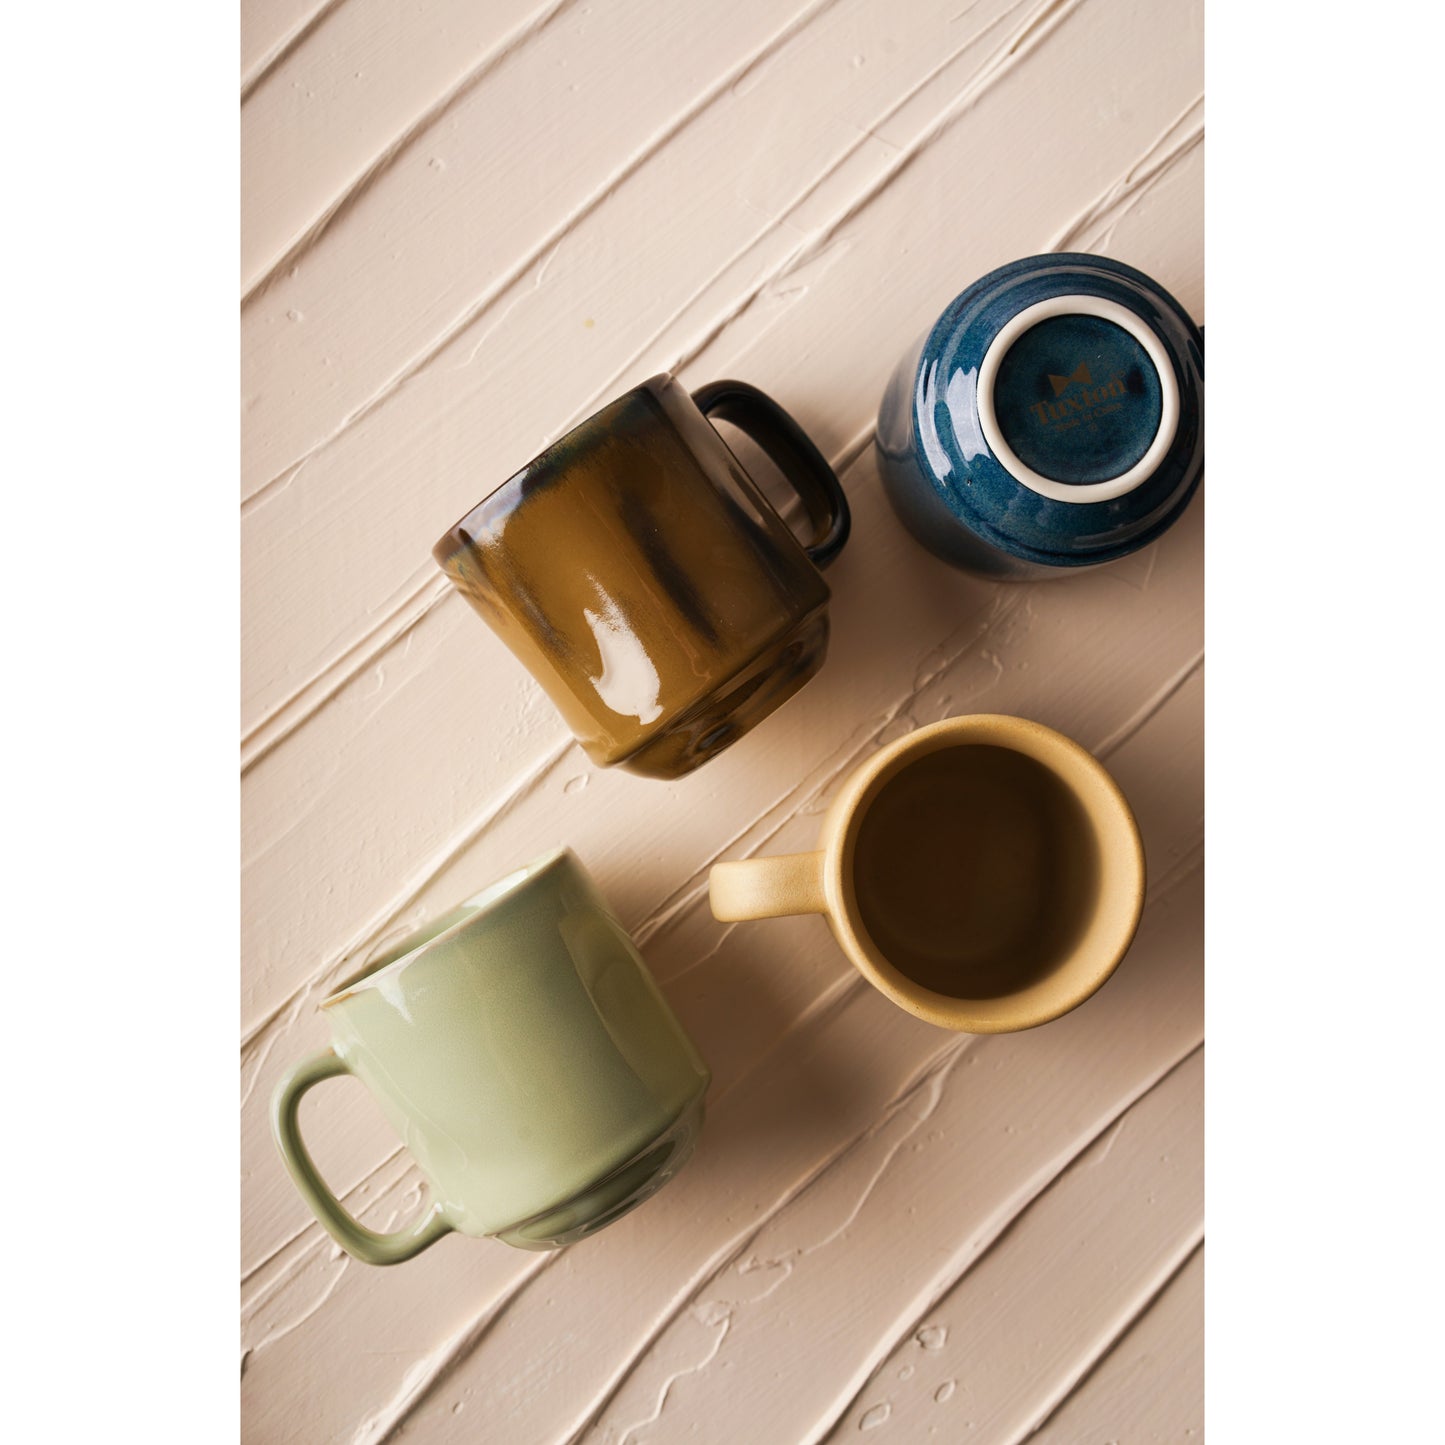 Artisan Stackable Mug Set